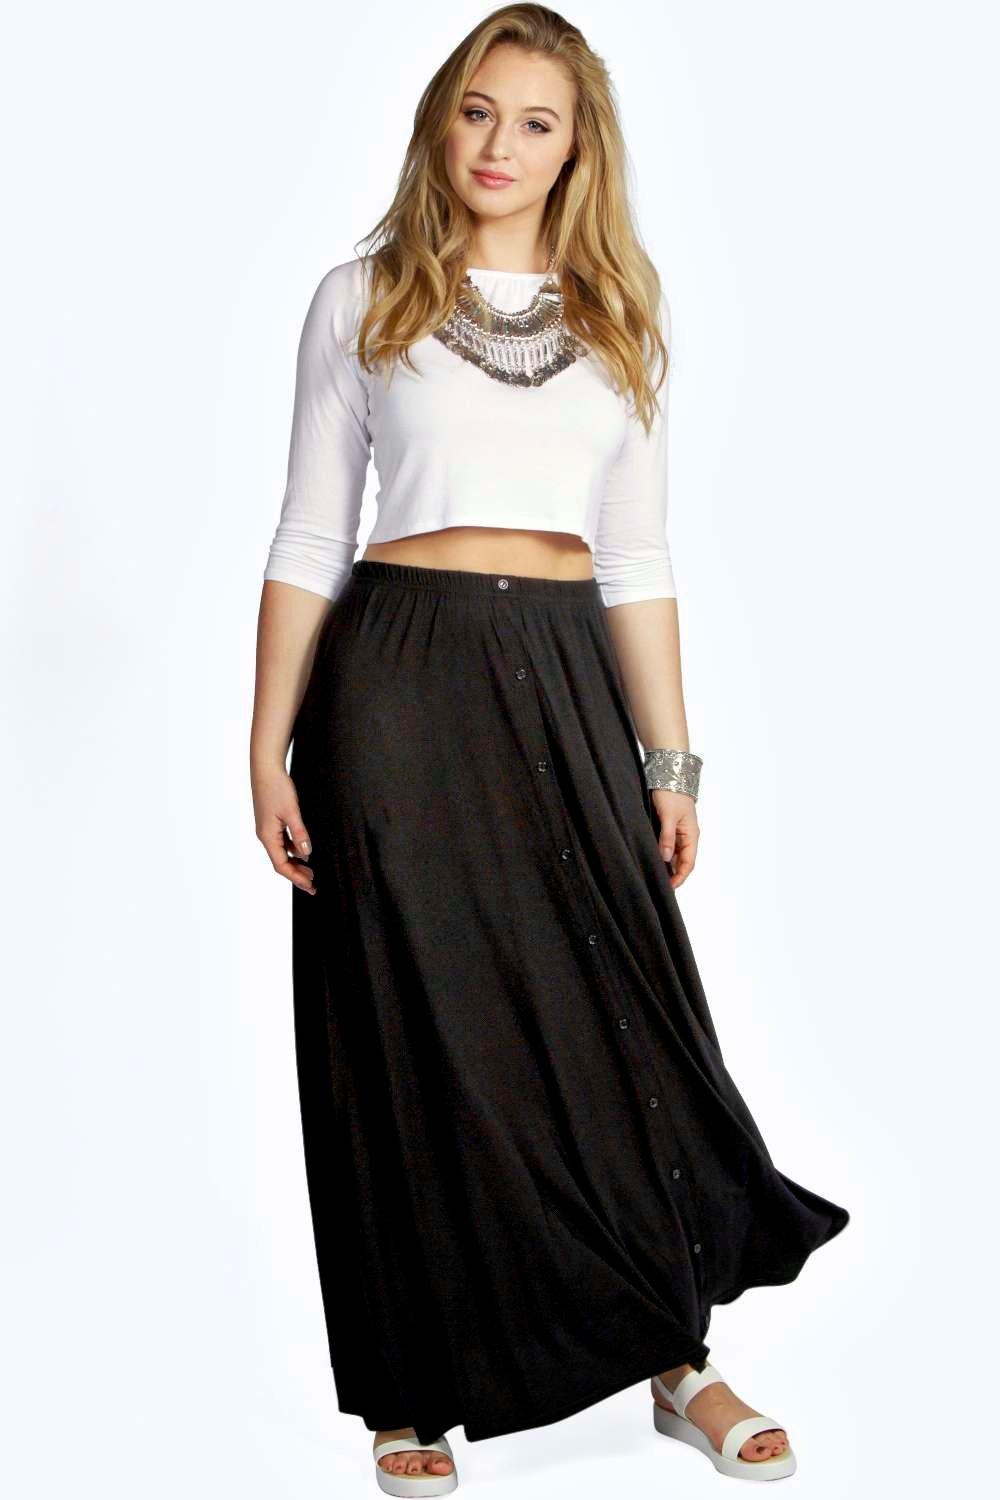 Boohoo Womens Plus Eliza Button Through Maxi Skirt in Black size 18 | eBay